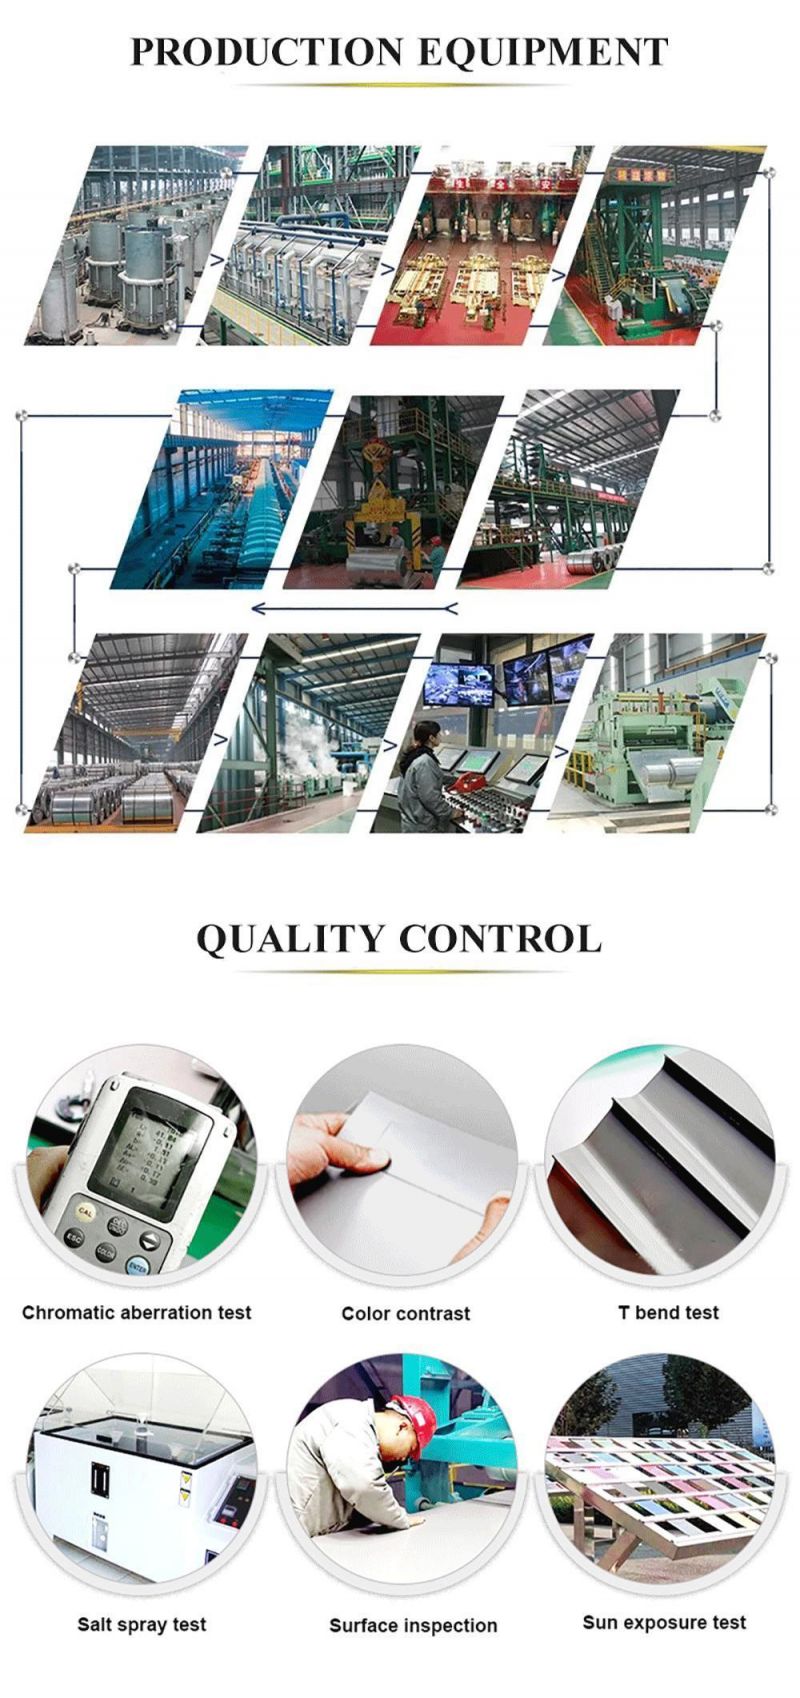 Prepainted Galvanized Steel Coil Factory/Sheet/PPGI/Dx51d/ PPGI Factory